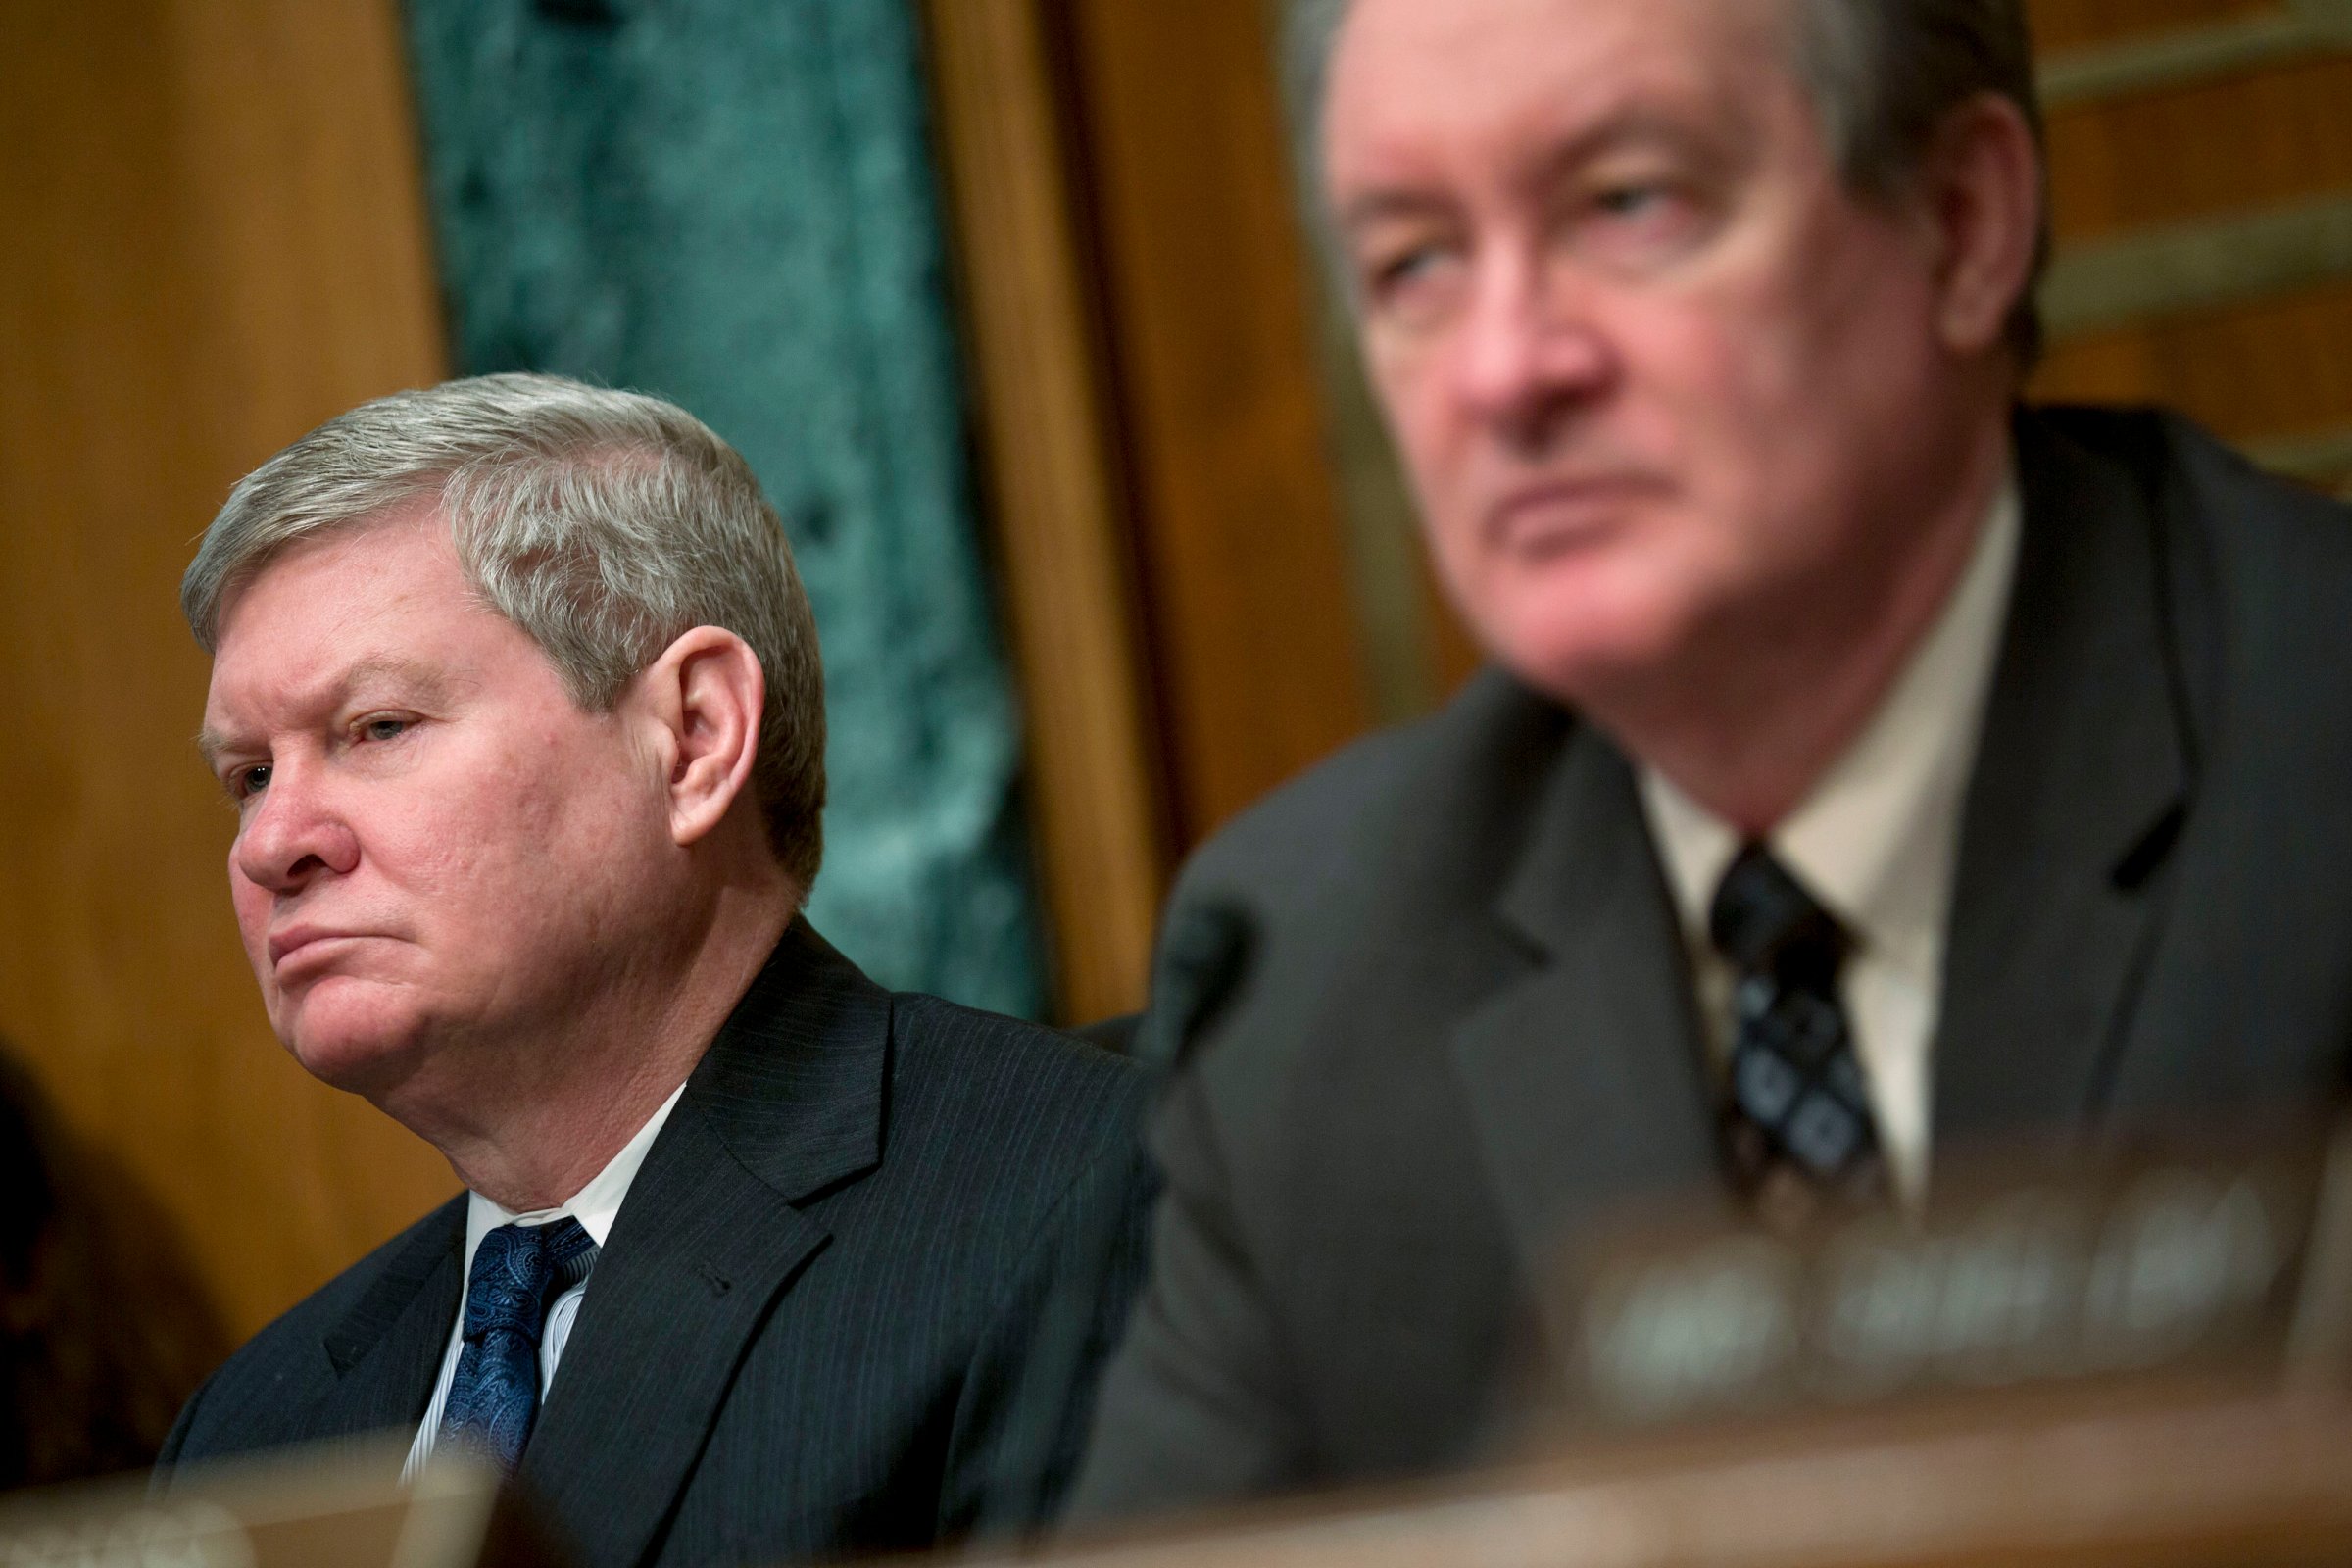 Senator Tim Johnson, chairman of the Senate Banking Committee, left, and Senator Mike Crapo listen during a Senate Banking Committee hearing in Washington, Feb. 27, 2014.